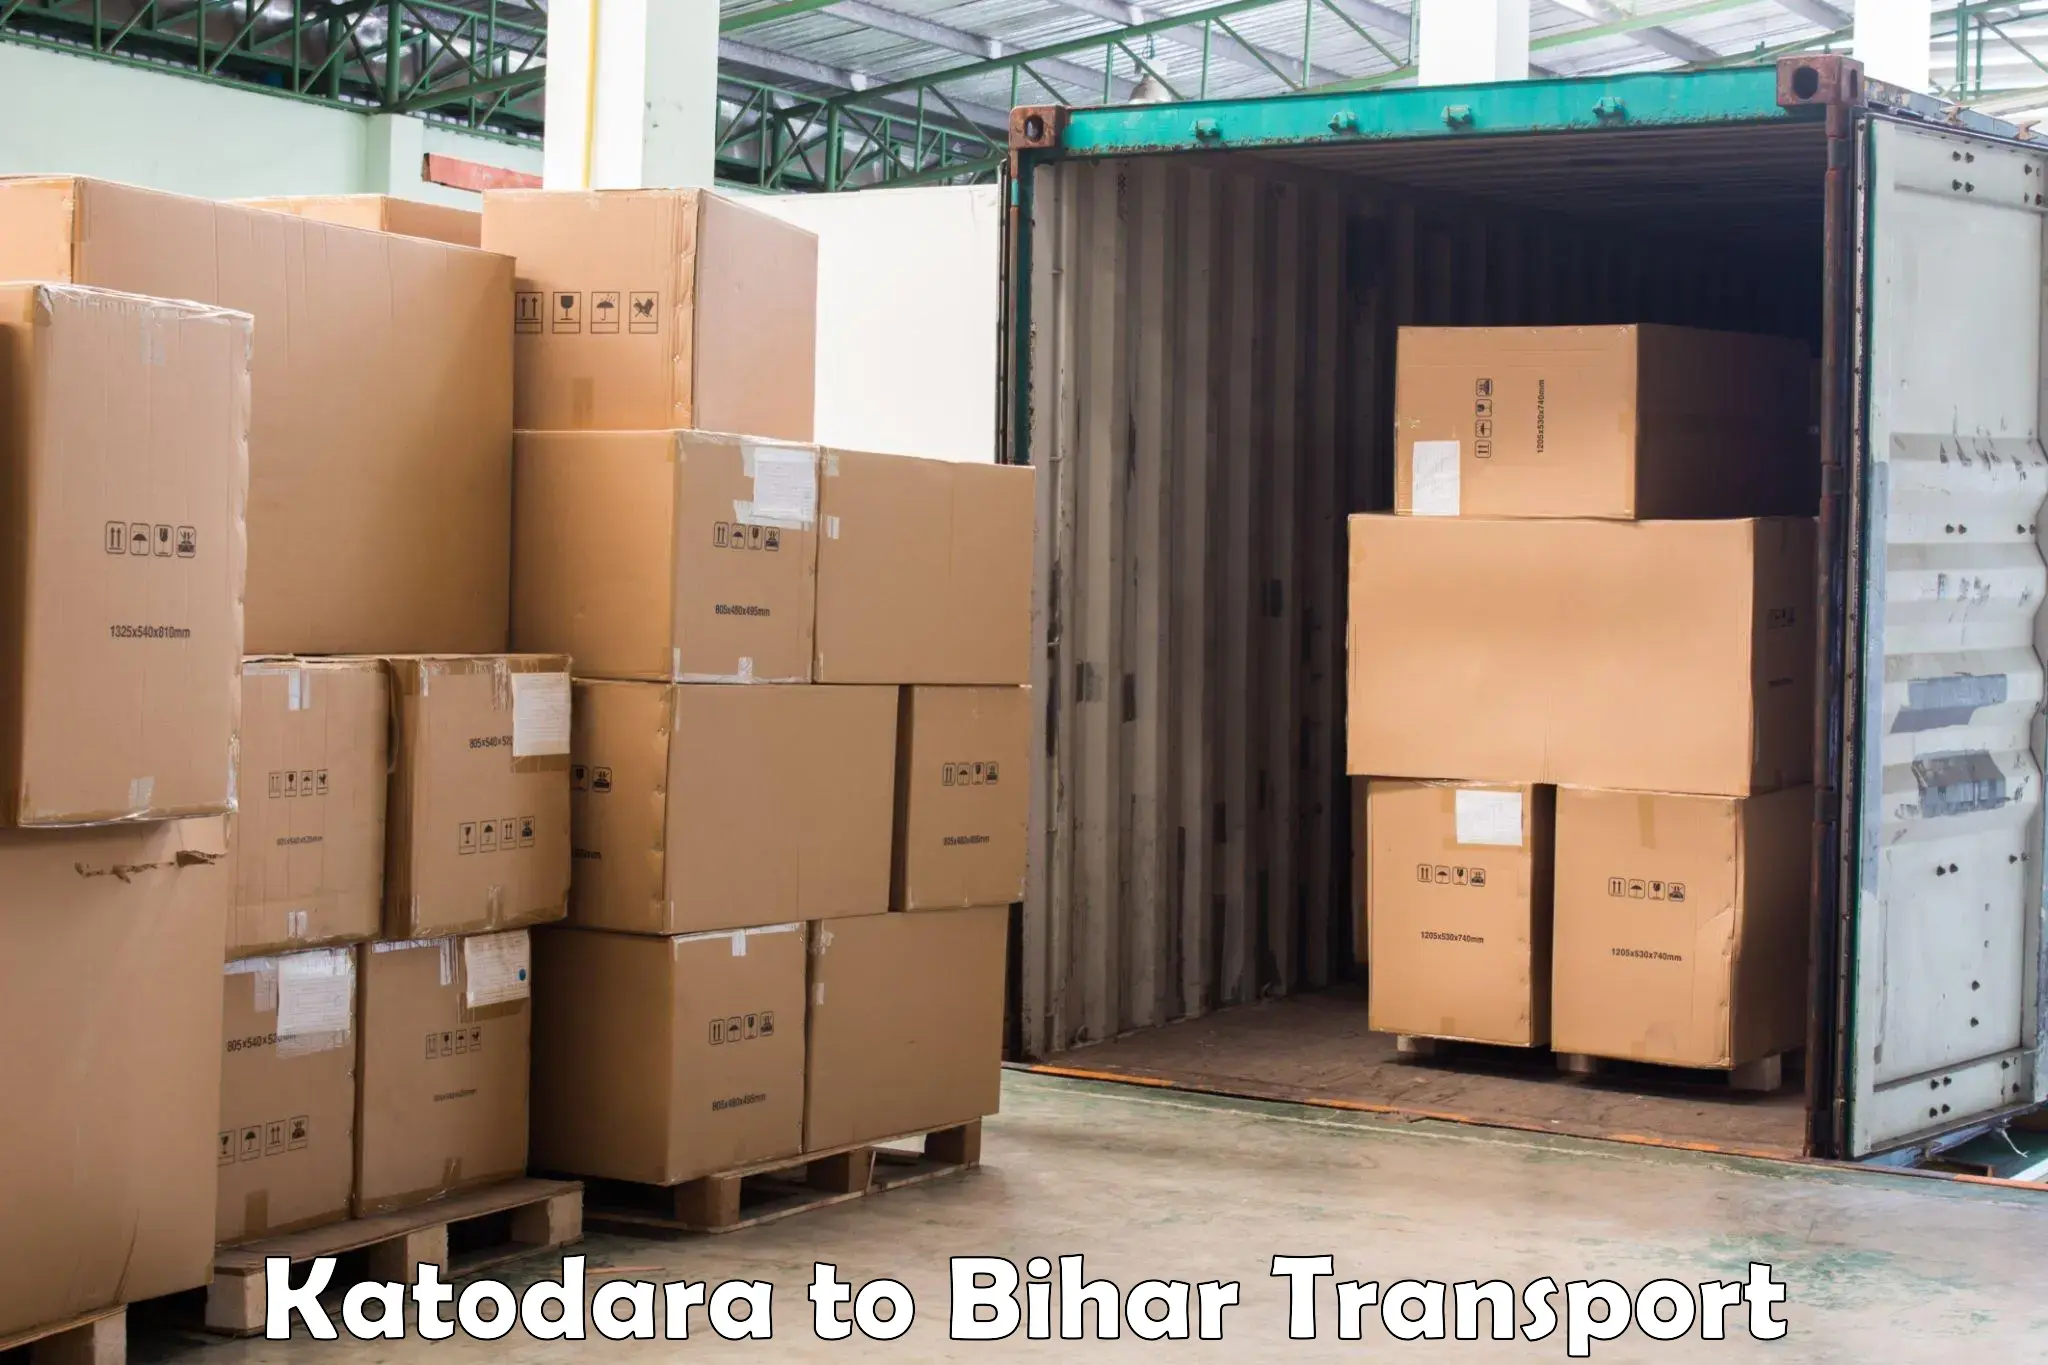 Online transport service Katodara to Katoria